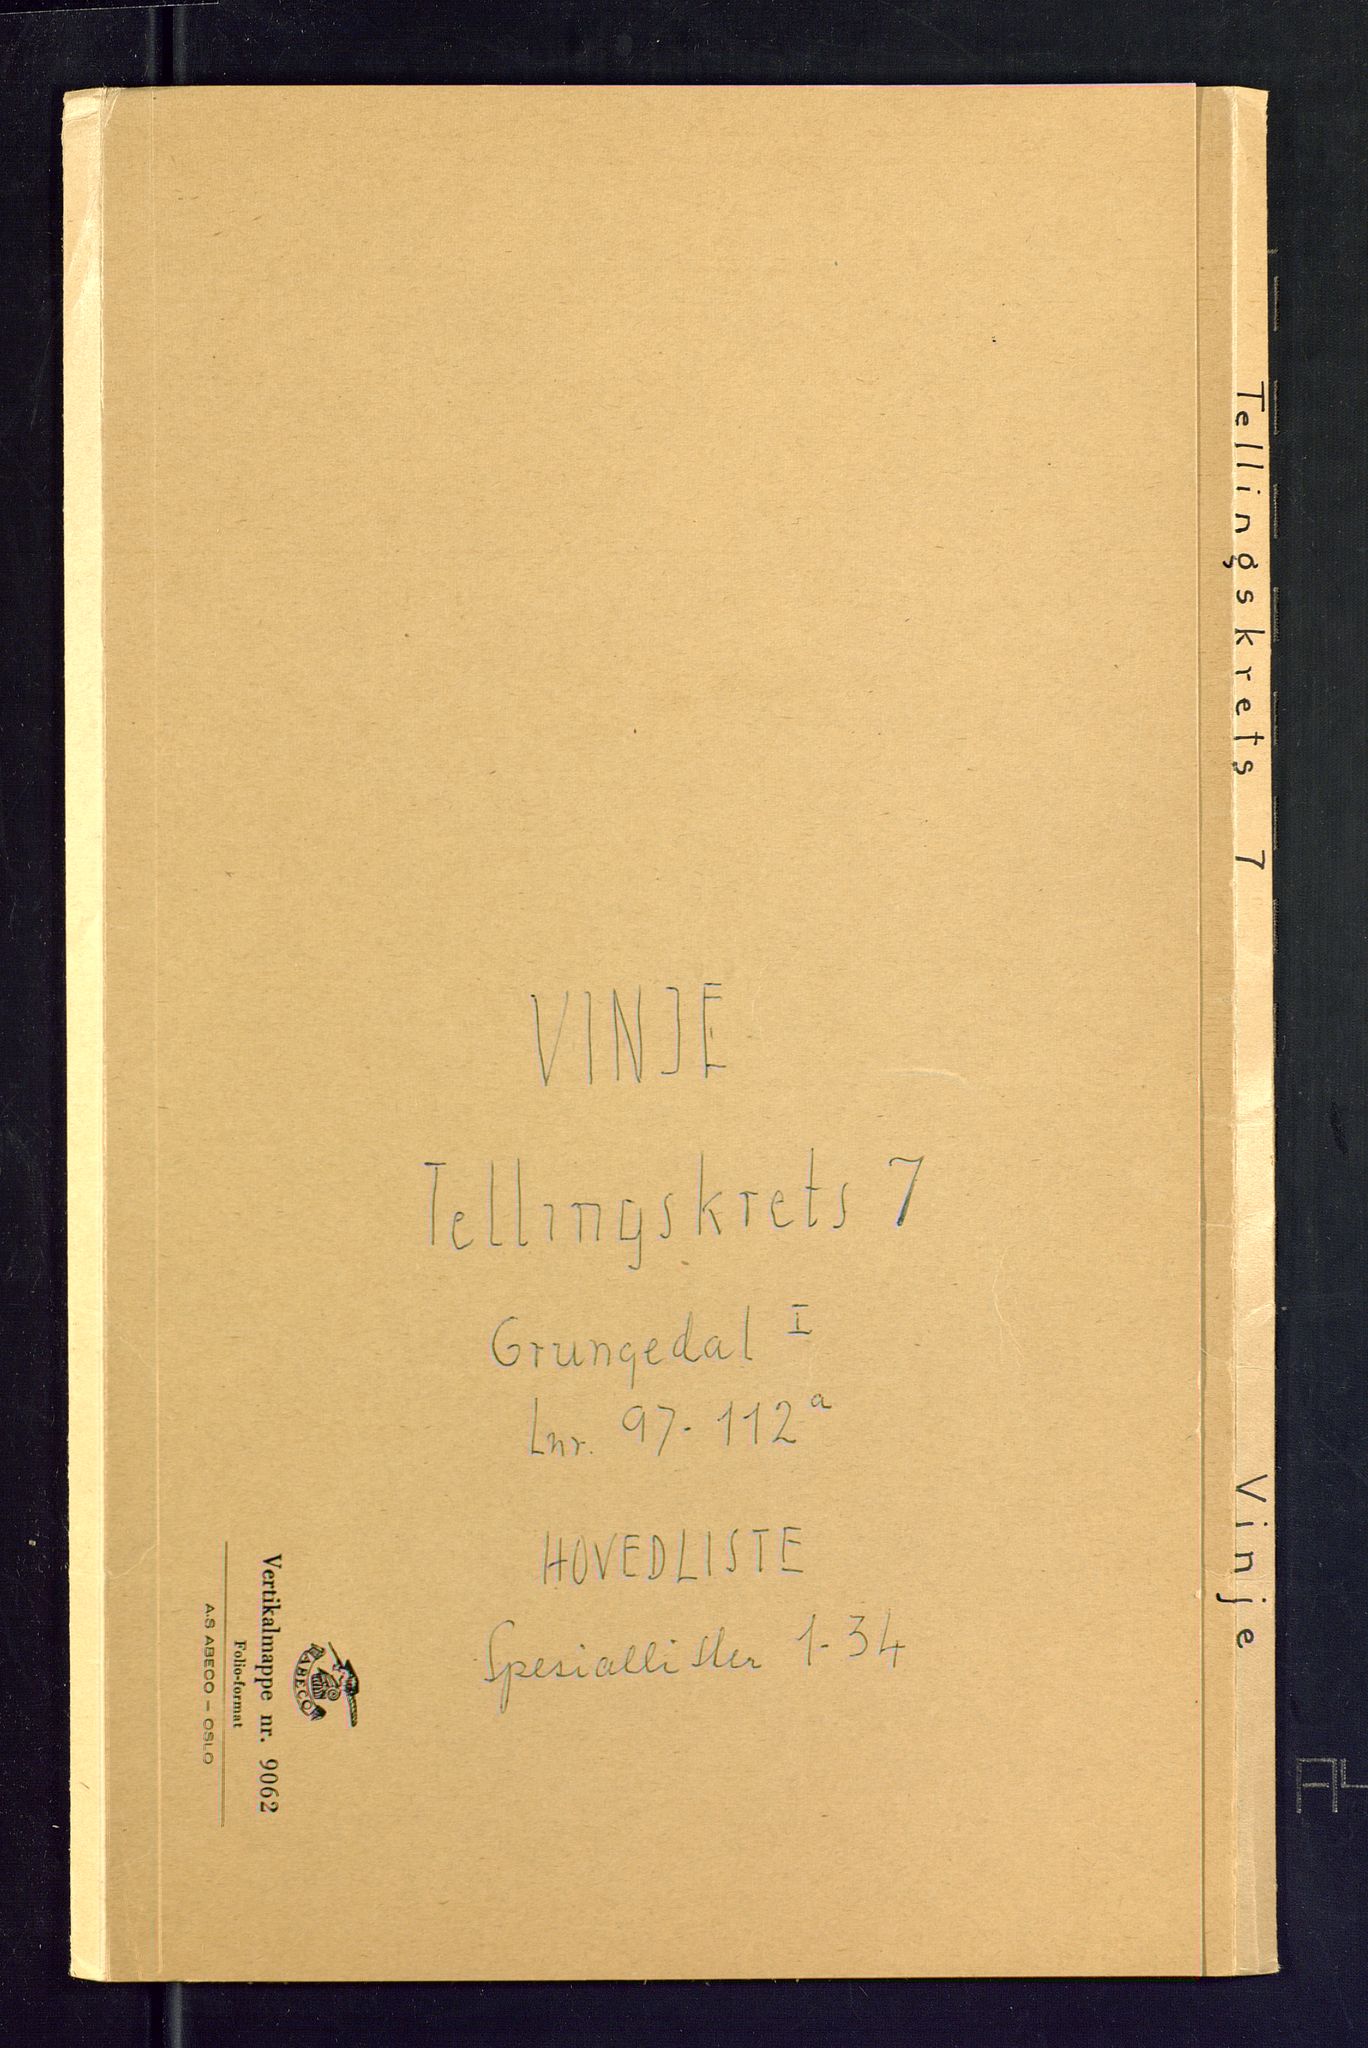 SAKO, Folketelling 1875 for 0834P Vinje prestegjeld, 1875, s. 25